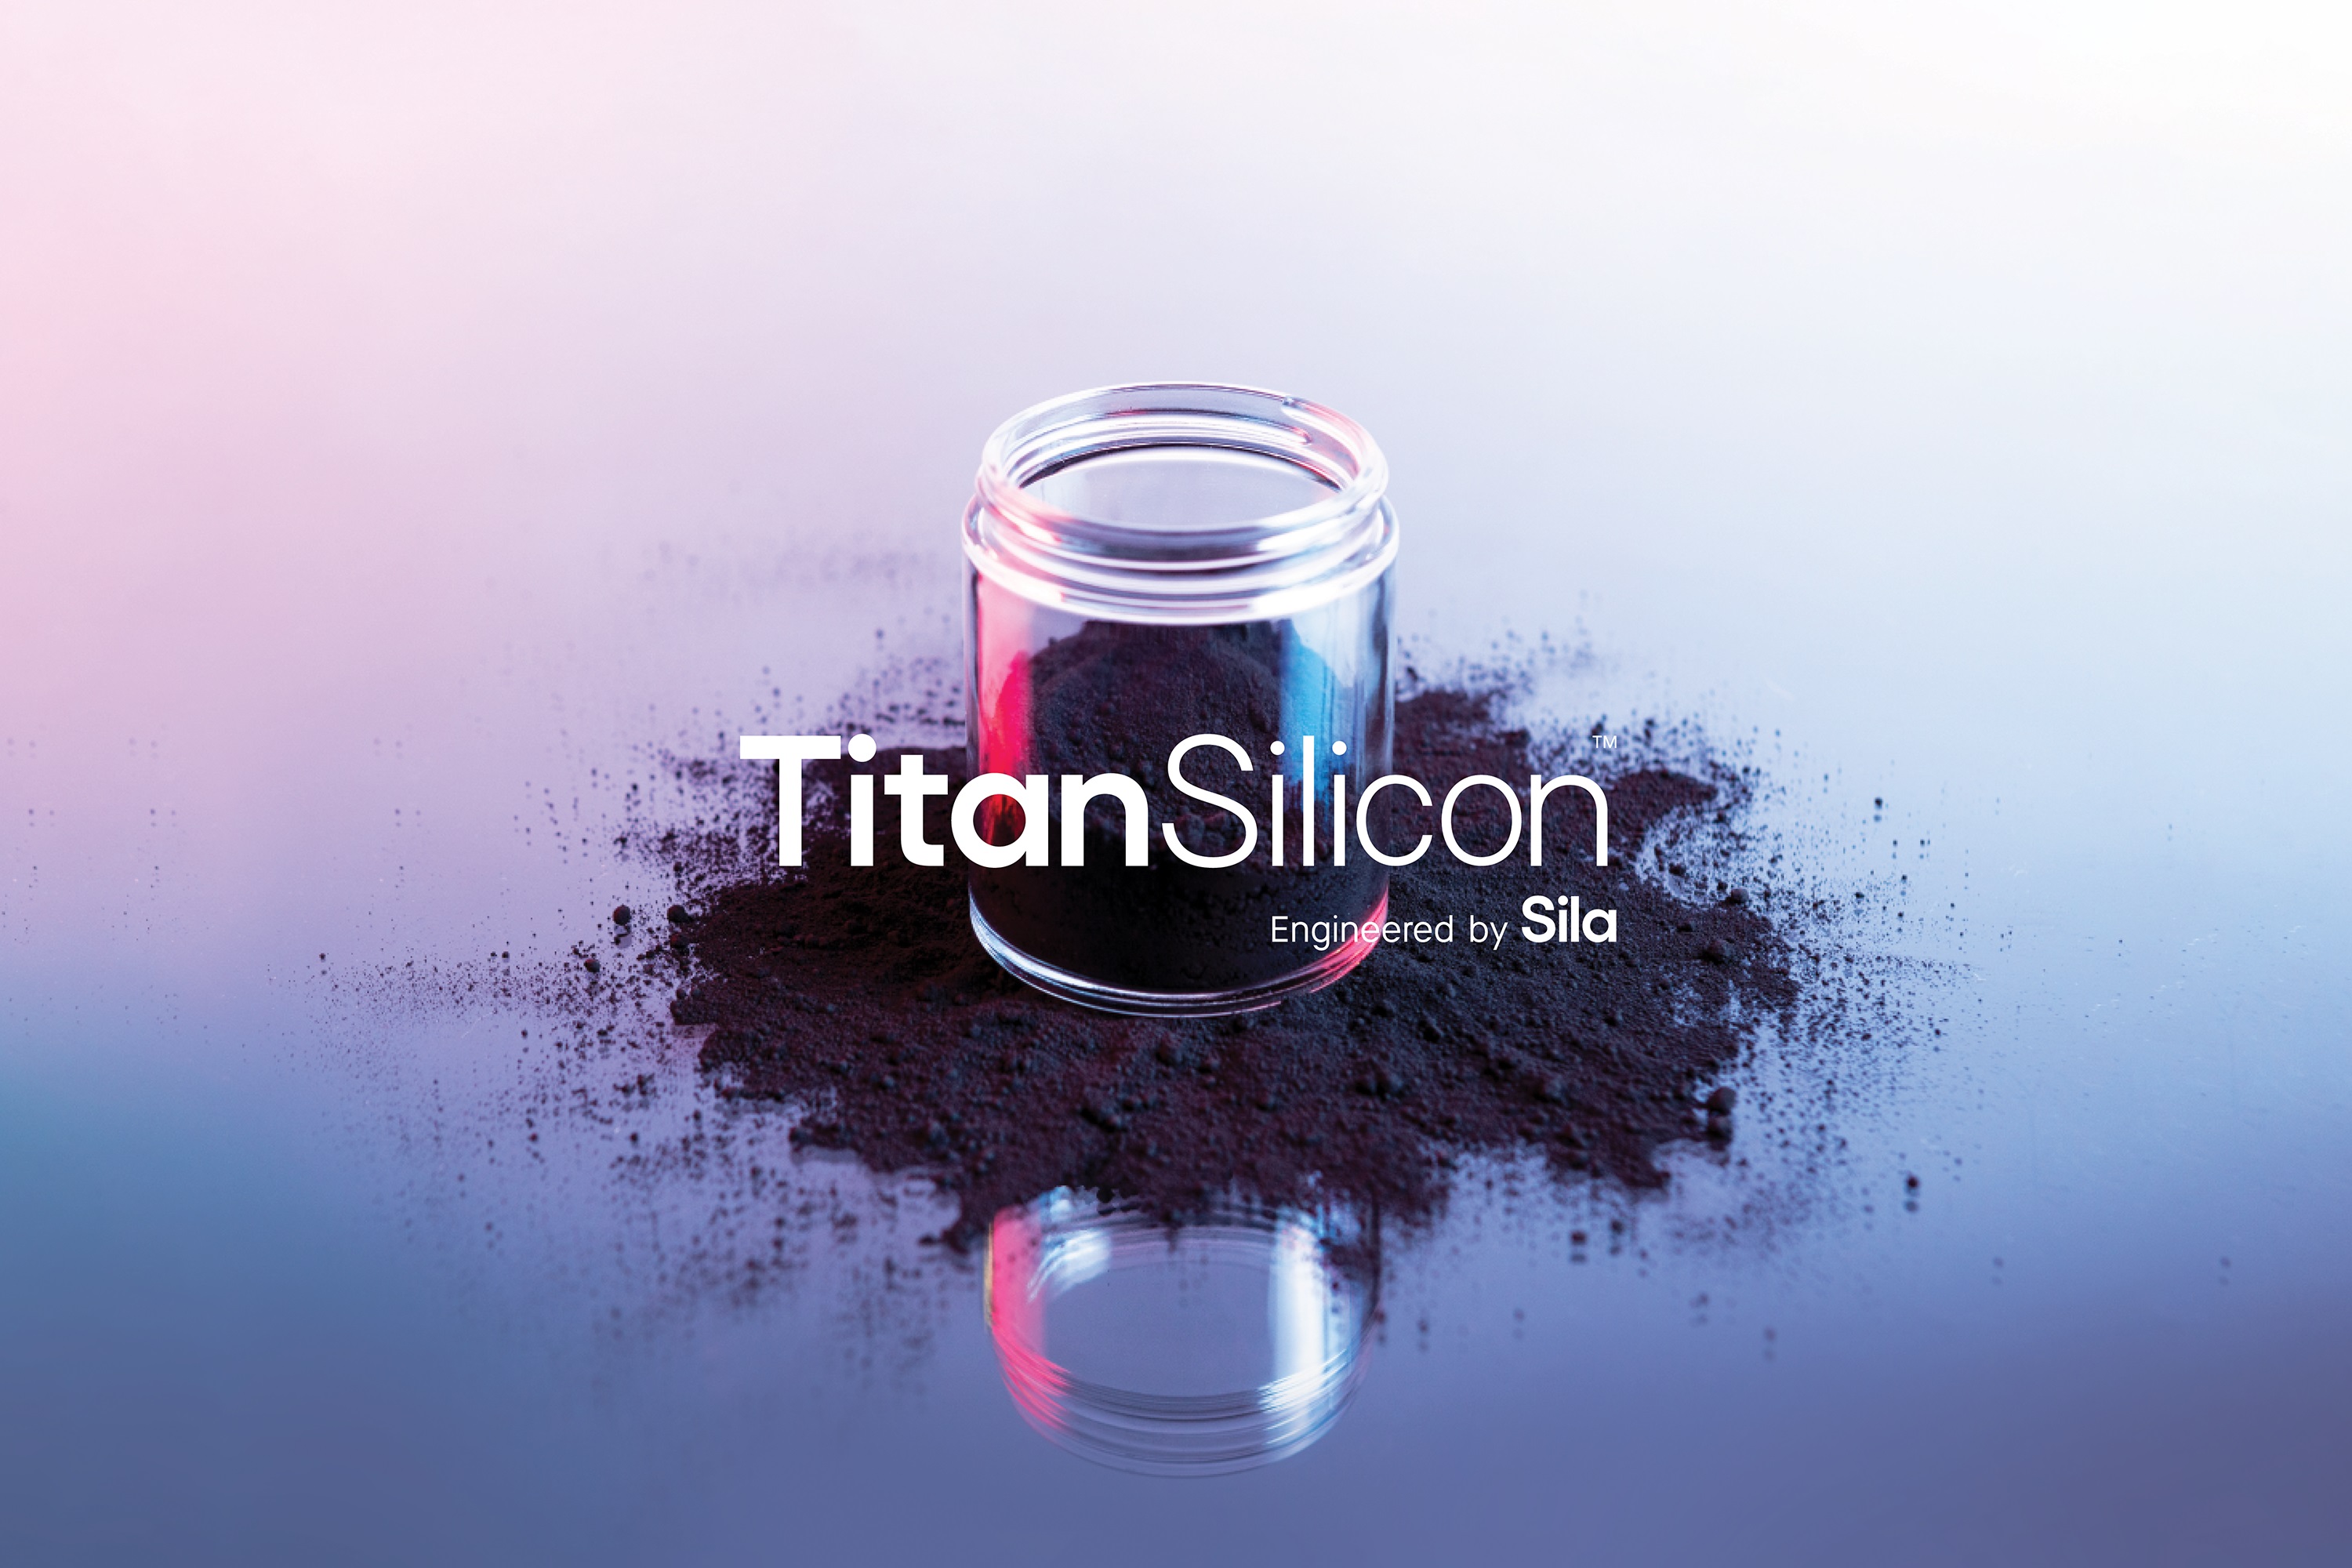 Titan Silicon (źródło: Sila)